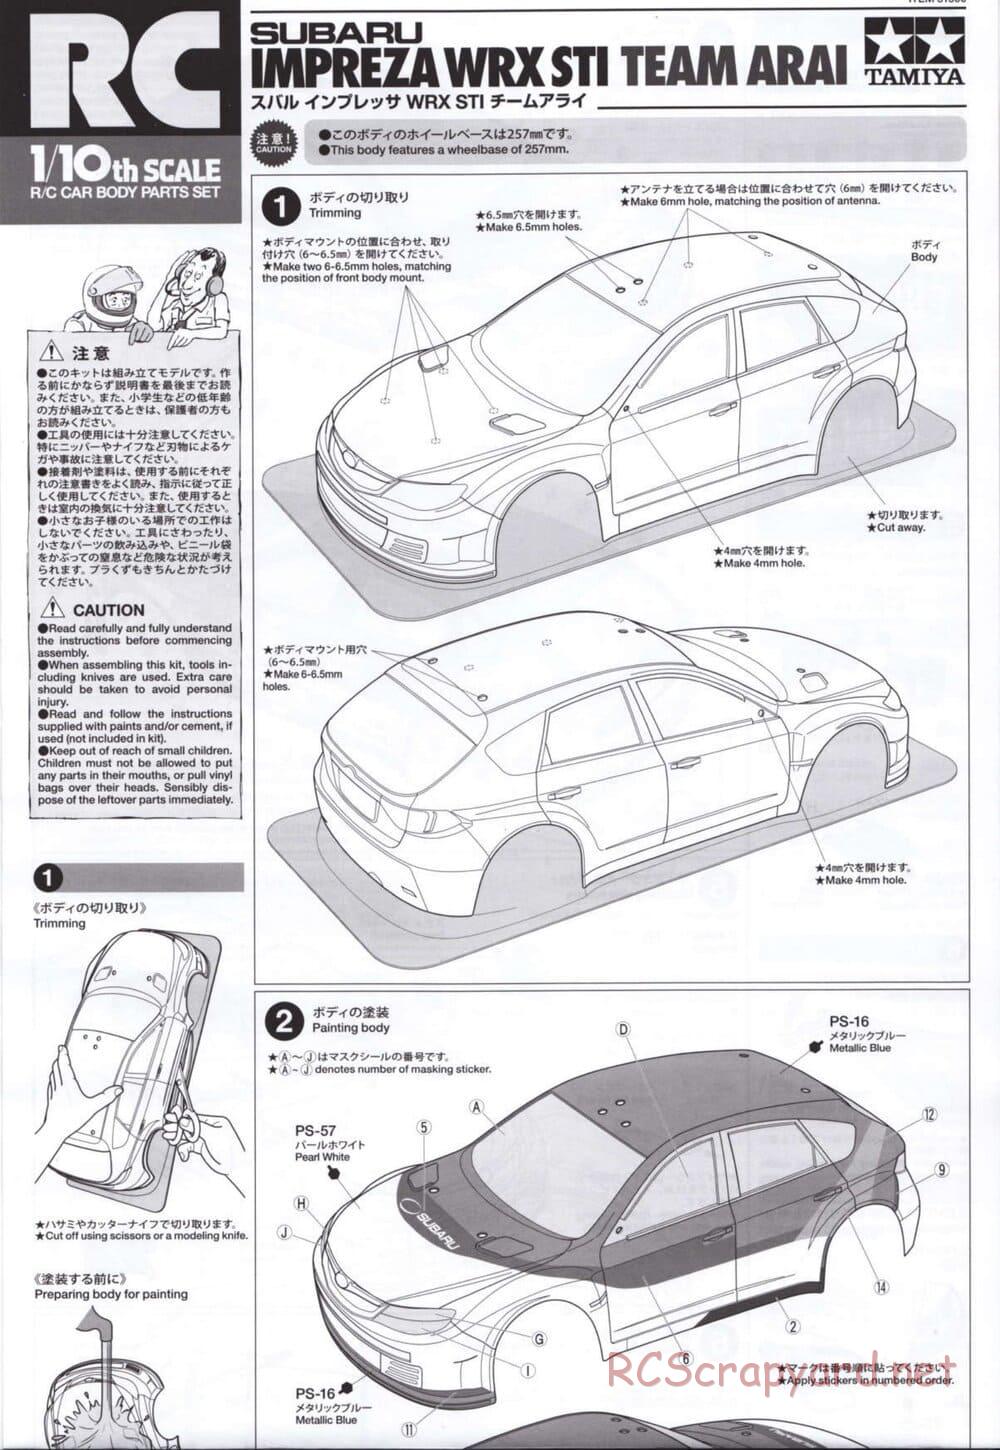 Tamiya - Subaru Impreza WRX STi Team Arai - XV-01 Chassis - Body Manual - Page 1